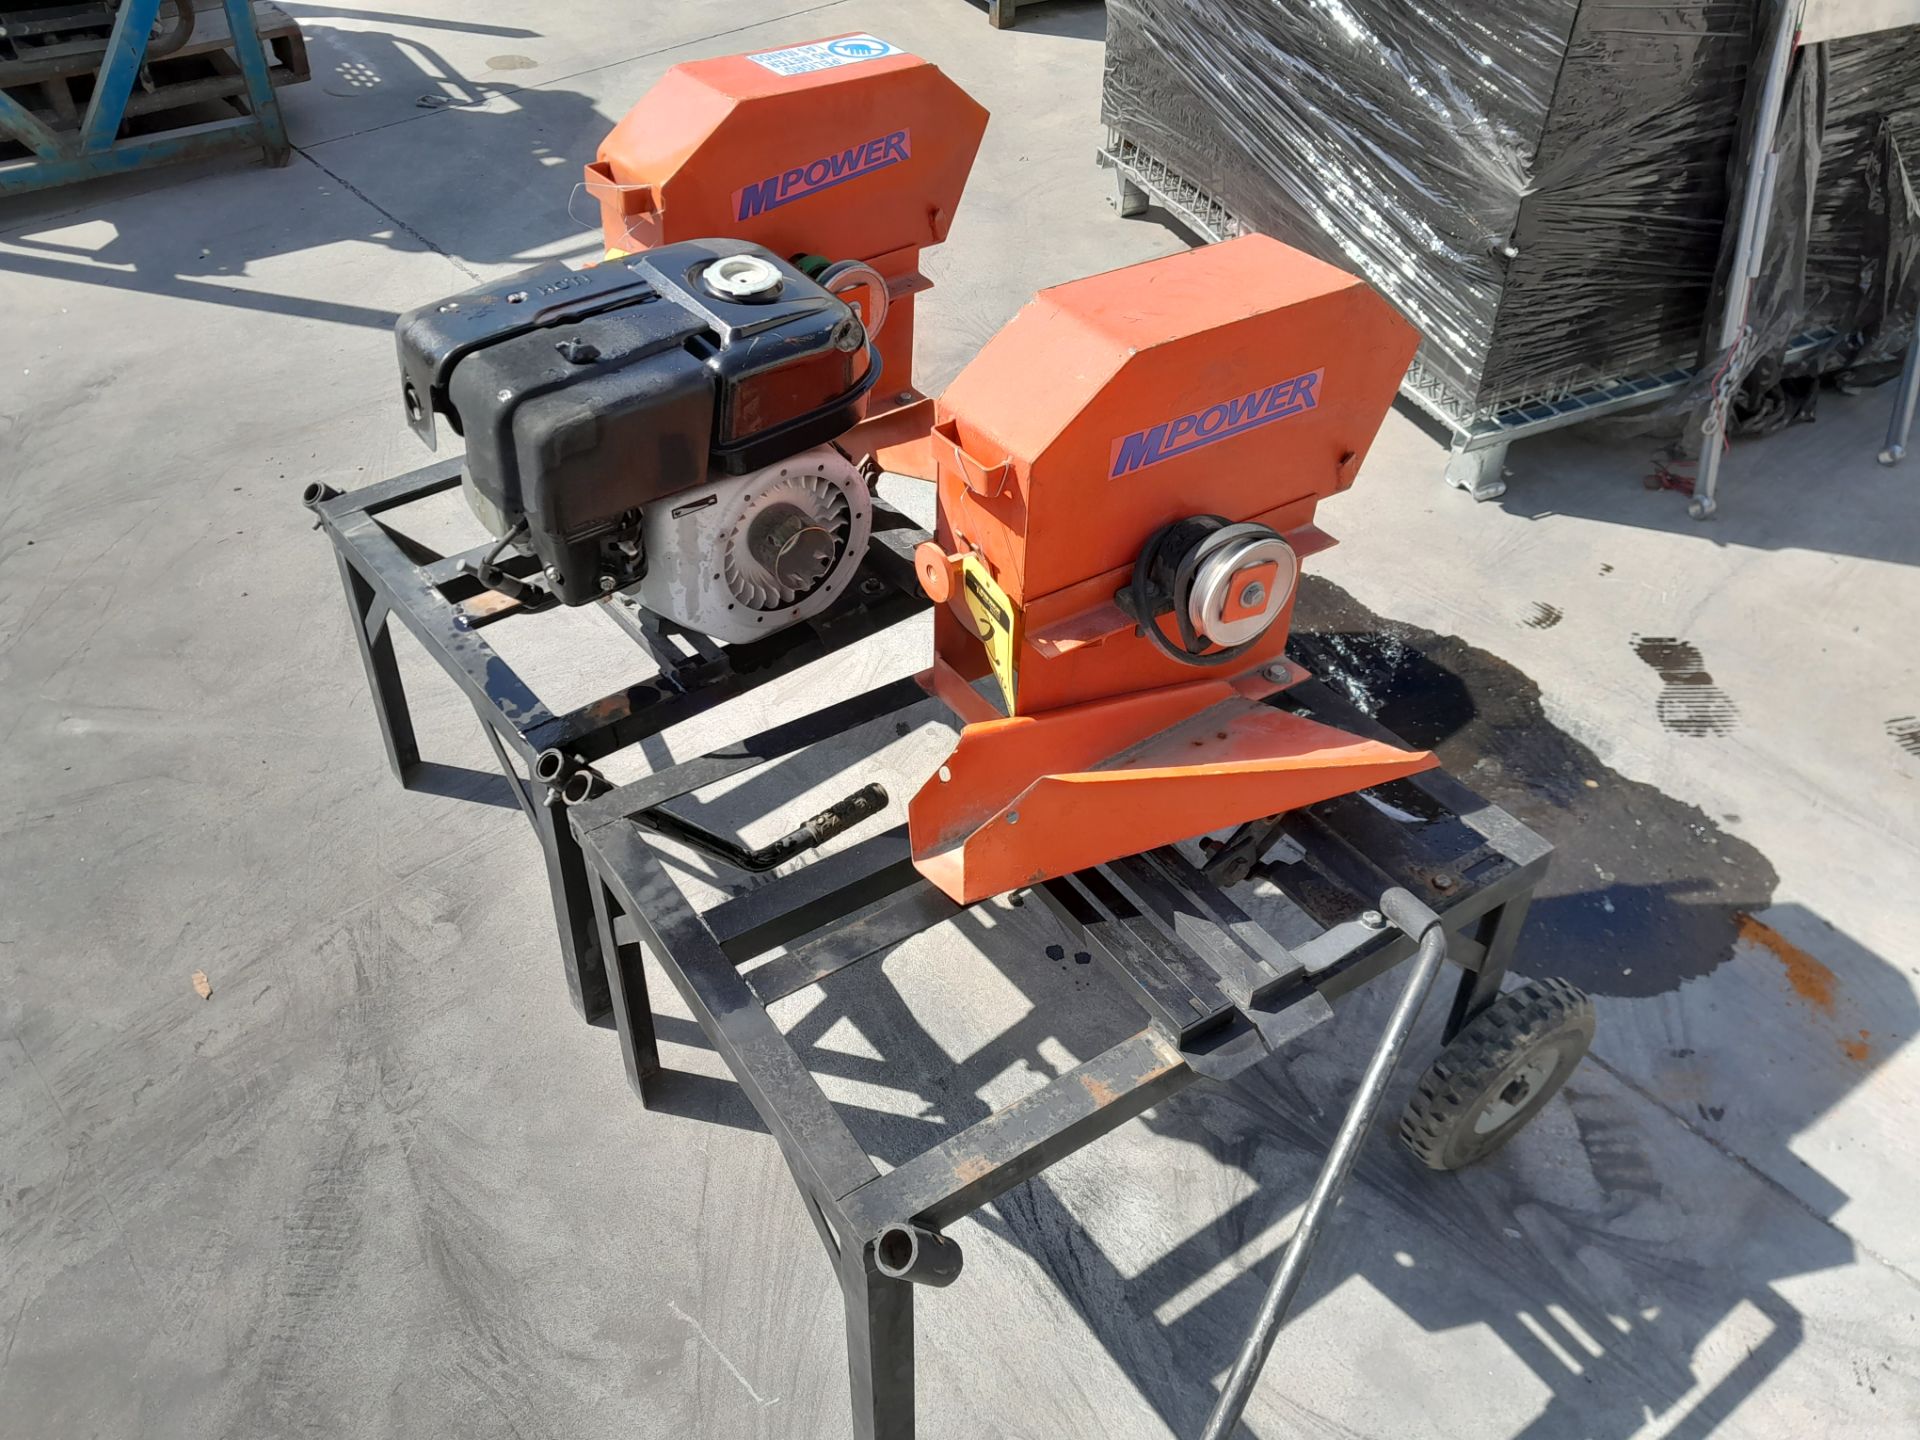 Lote de 2 trituradoras Marca MPOWER, Modelo ND, Color Naranja (Incompleto) (Equipo usado, favor - Image 3 of 4